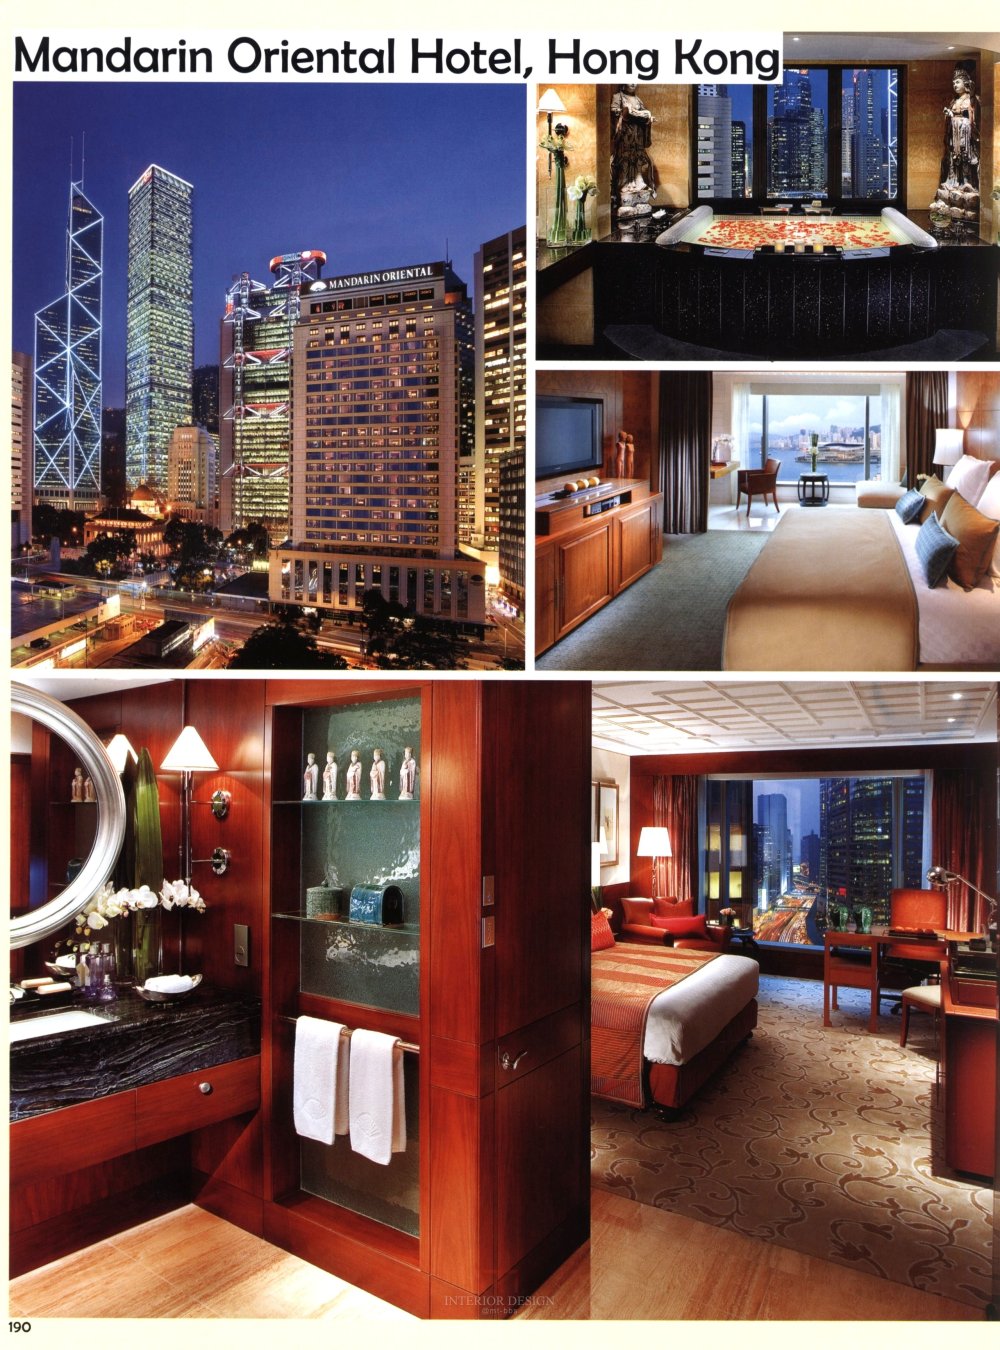 101全球酒店客房 101HOTELS GUEST ROOMS_图站_AiJpgg_com_185.jpg